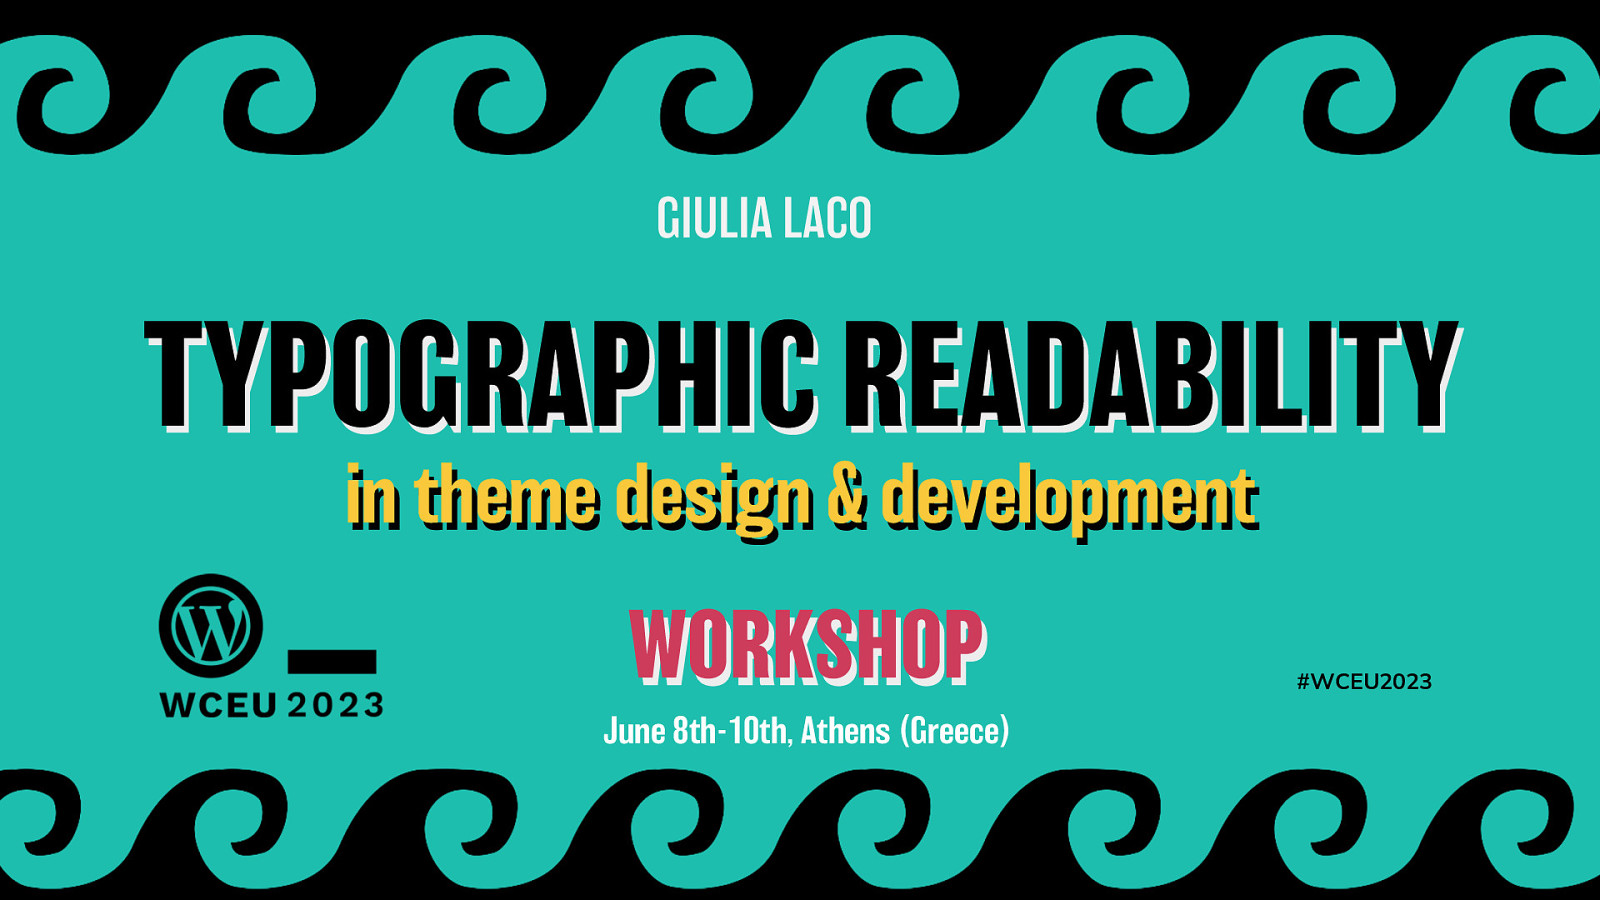 Typographic readability in theme design & development – WORKSHOP